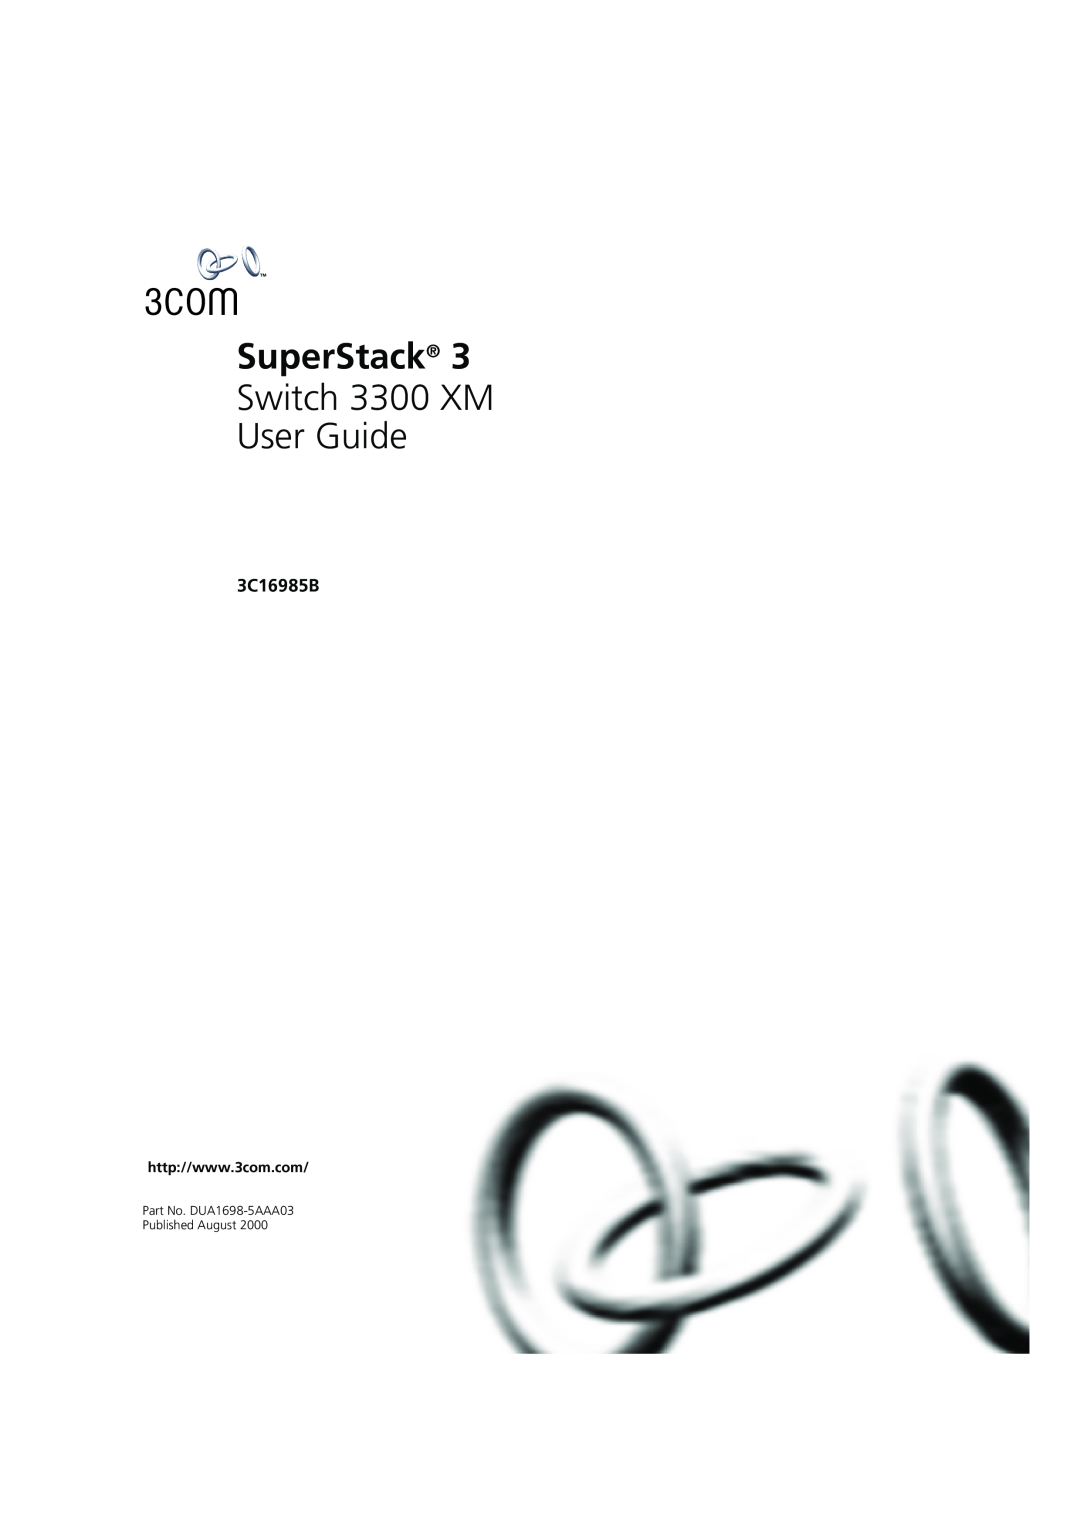 3Com DUA1698 manual SuperStack, Switch 3300 XM User Guide, 3C16985B 